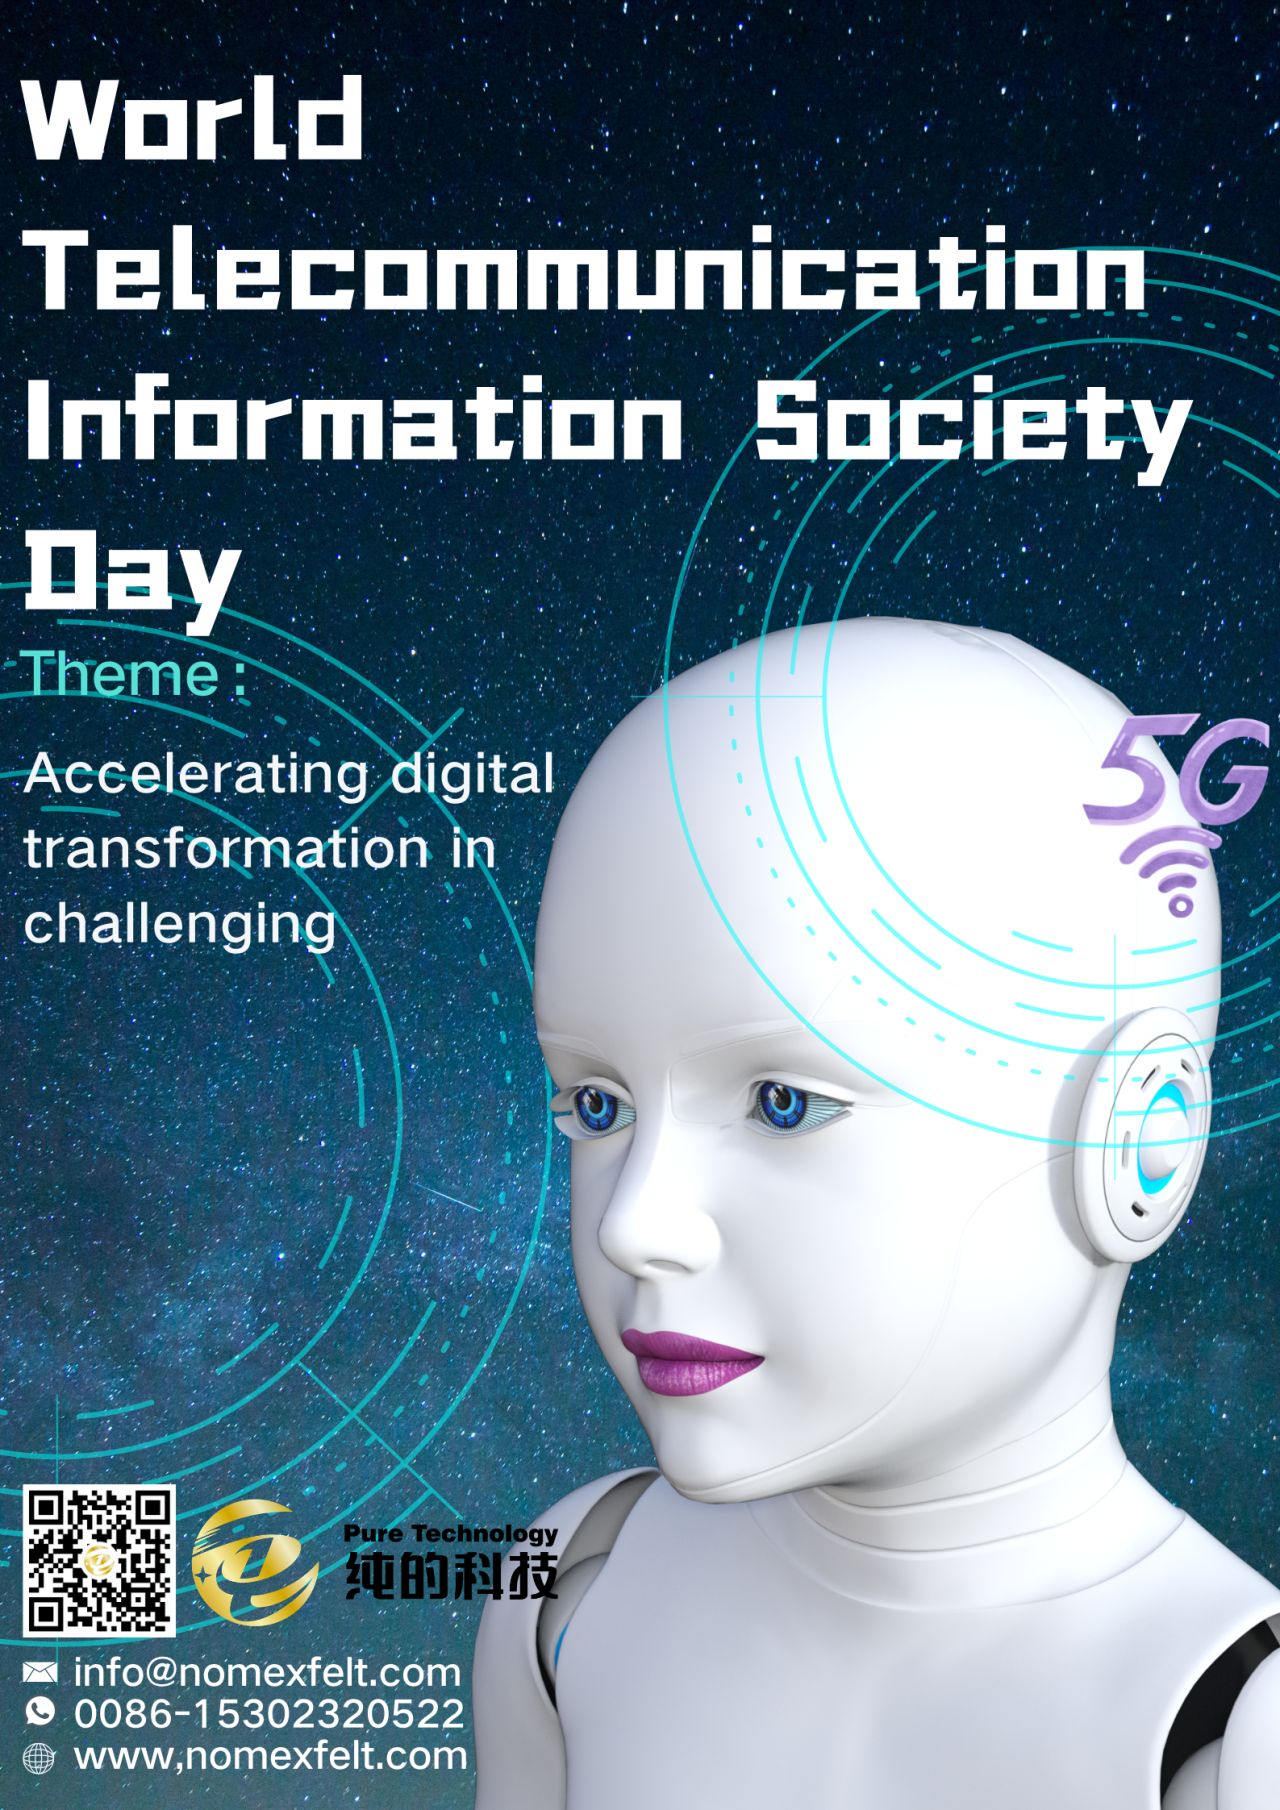  World Telecommunication and Information Society Day